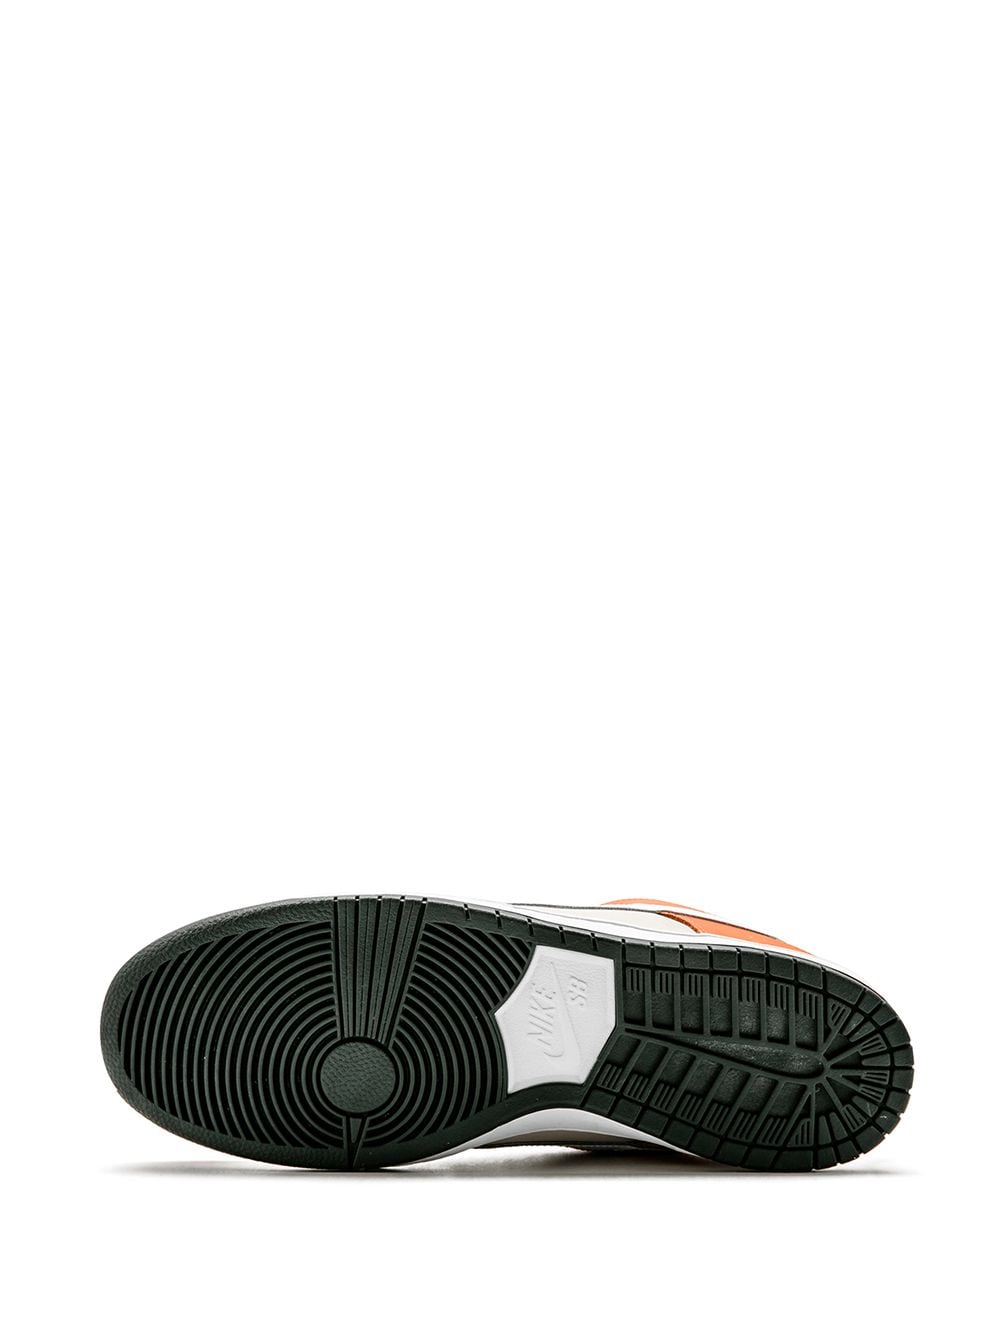 Nike SB Dunk Low Premium Orange Box Sneakers - Farfetch